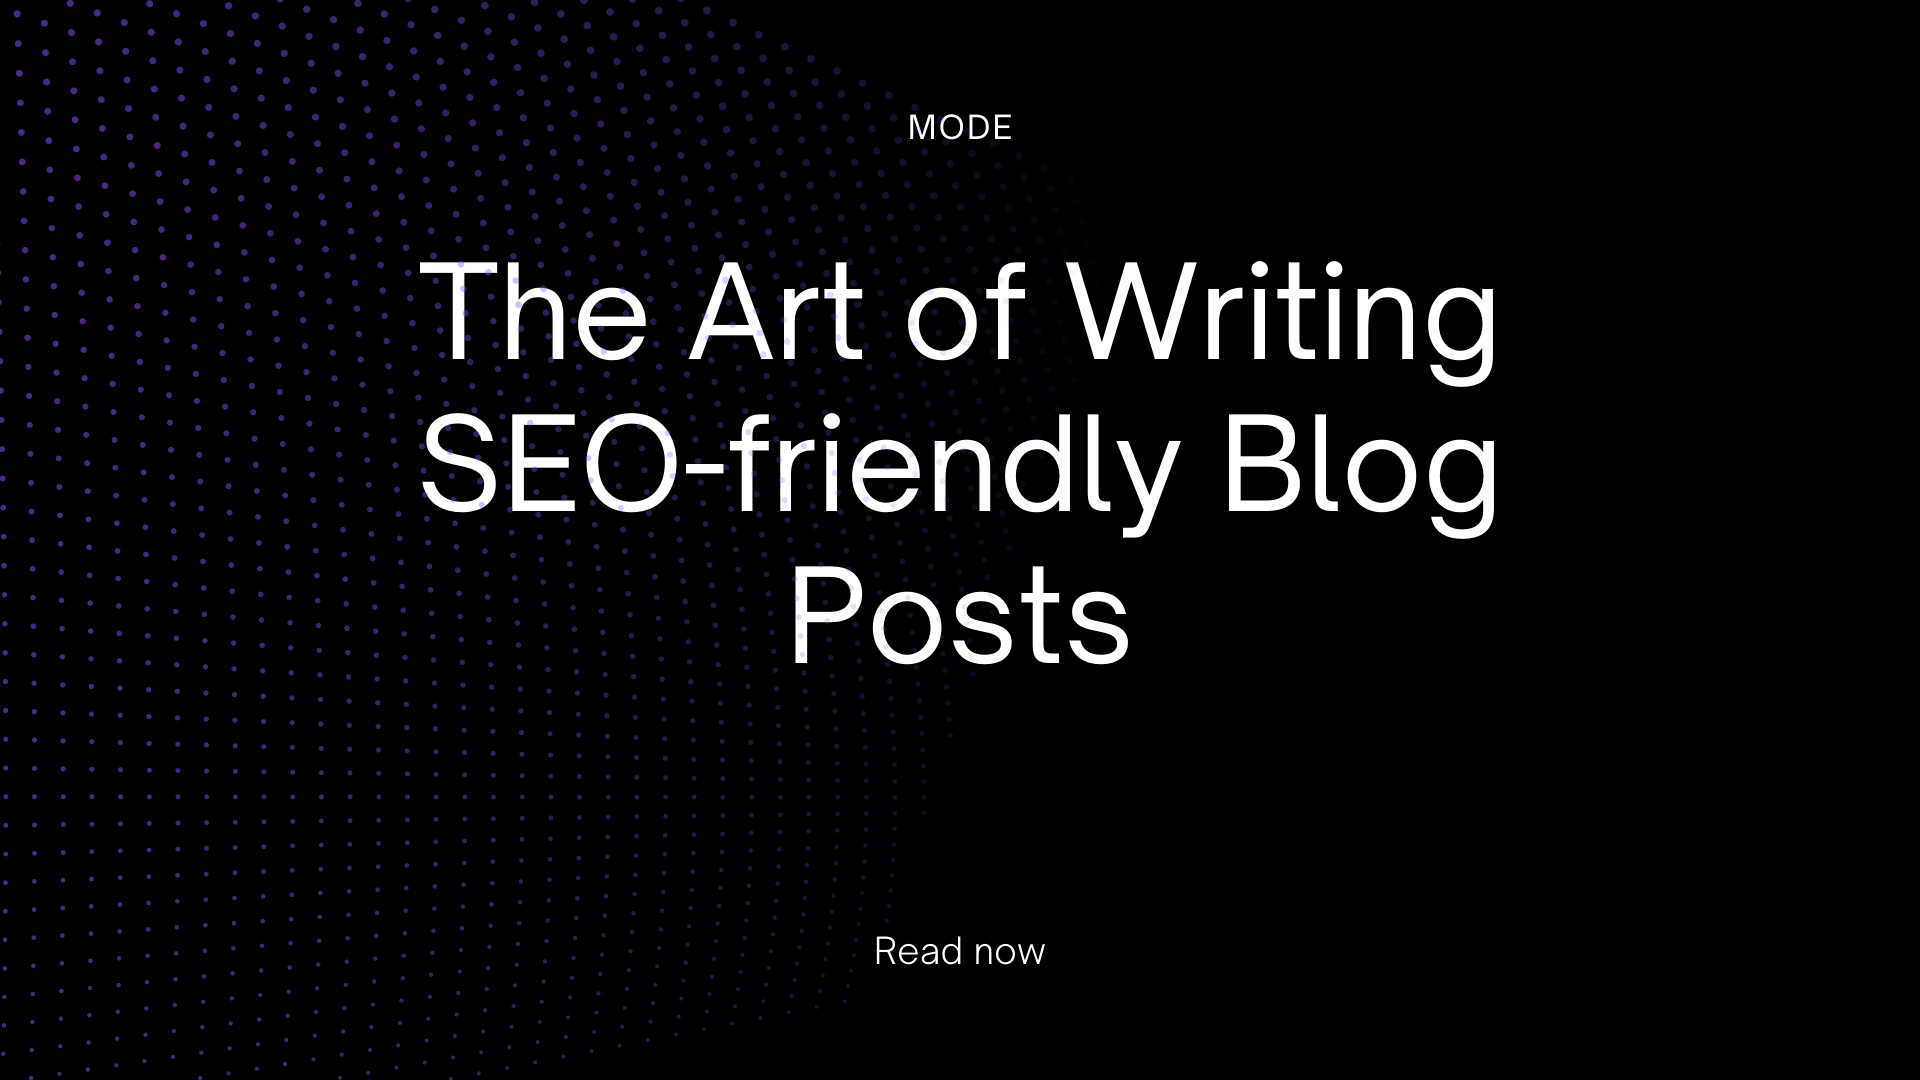 The Art of Writing SEO-friendly Blog Posts